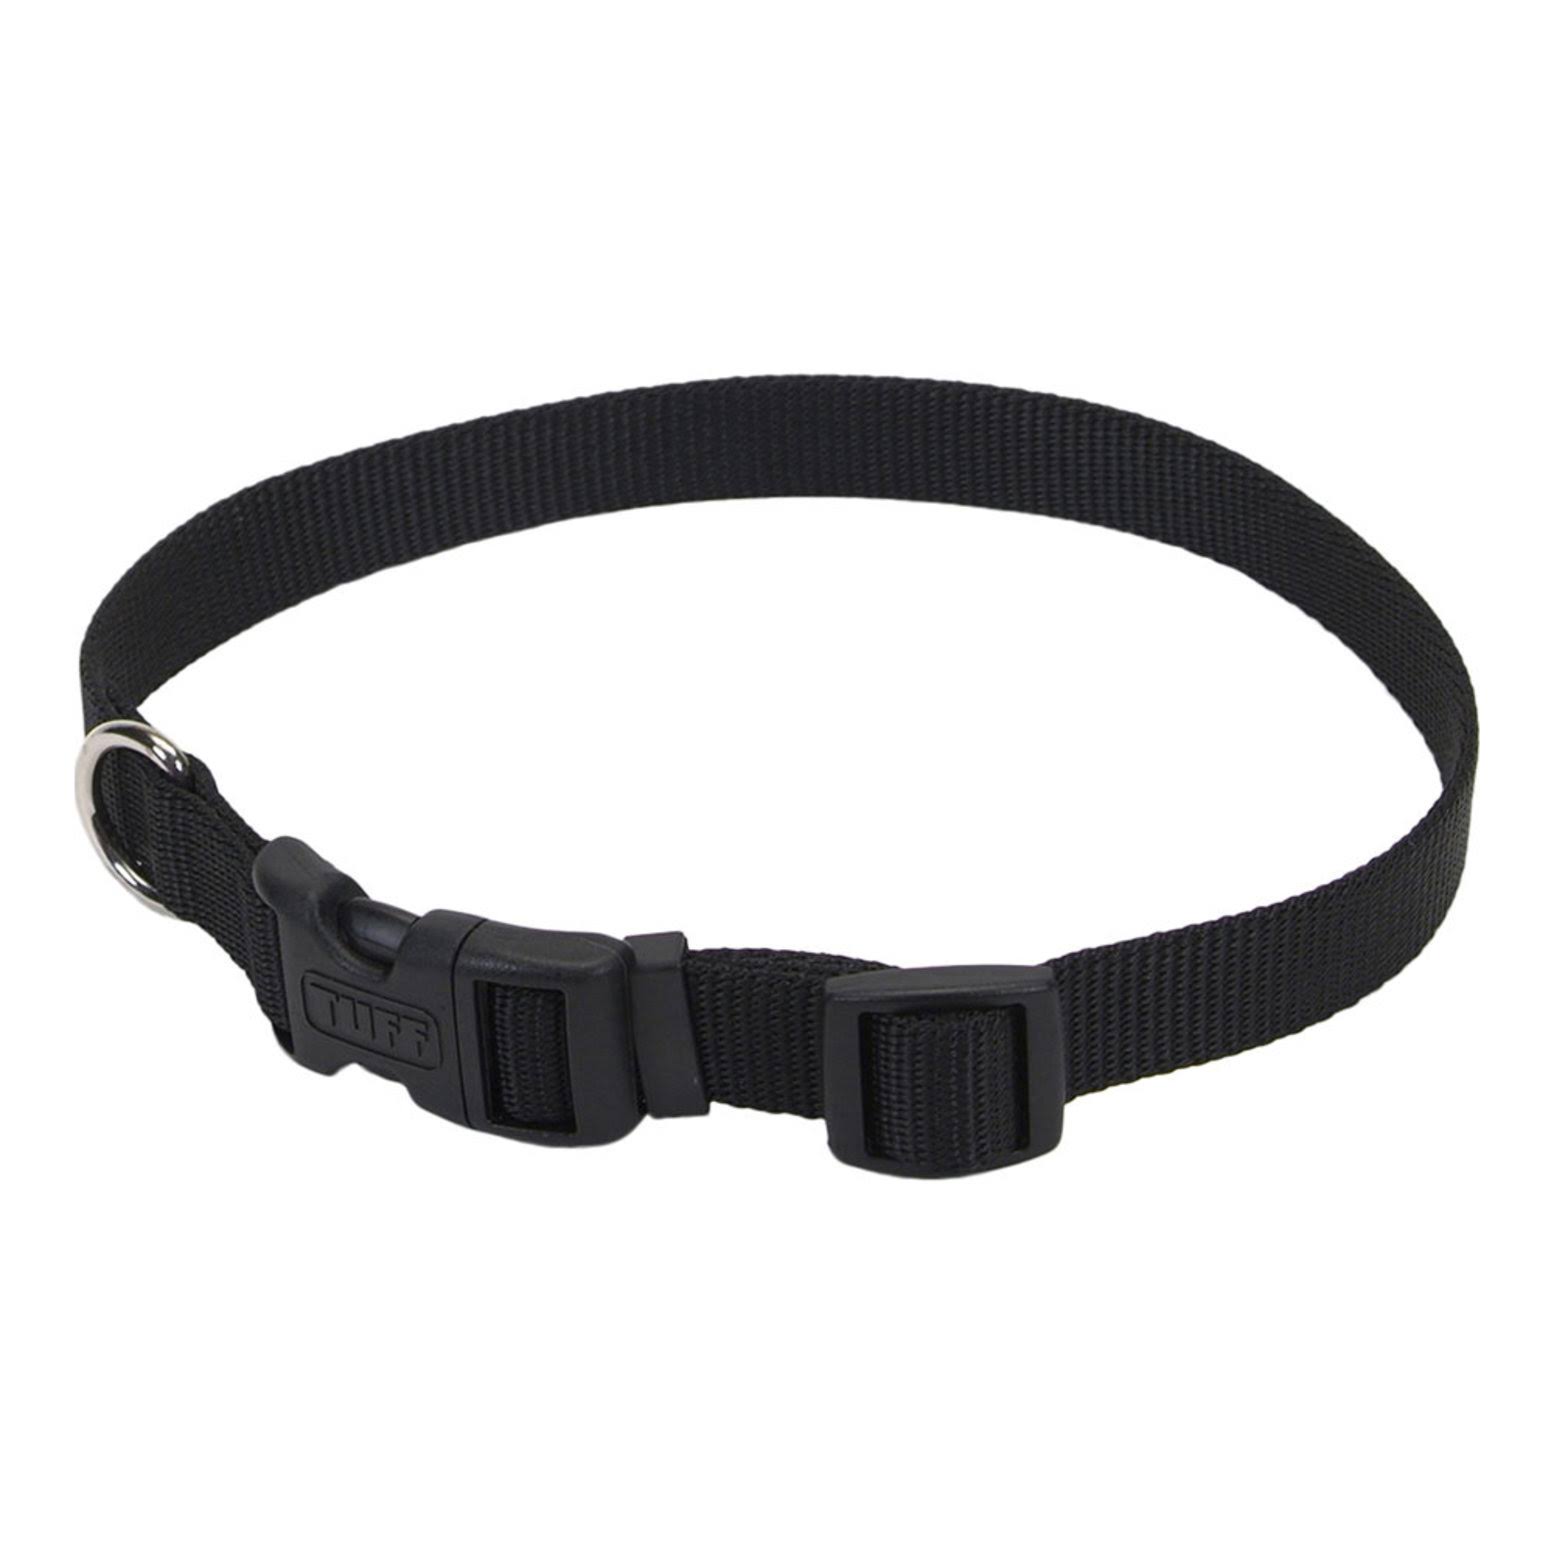 Coastal Pet Products Nylon Adjustable Collar - Black, Medium